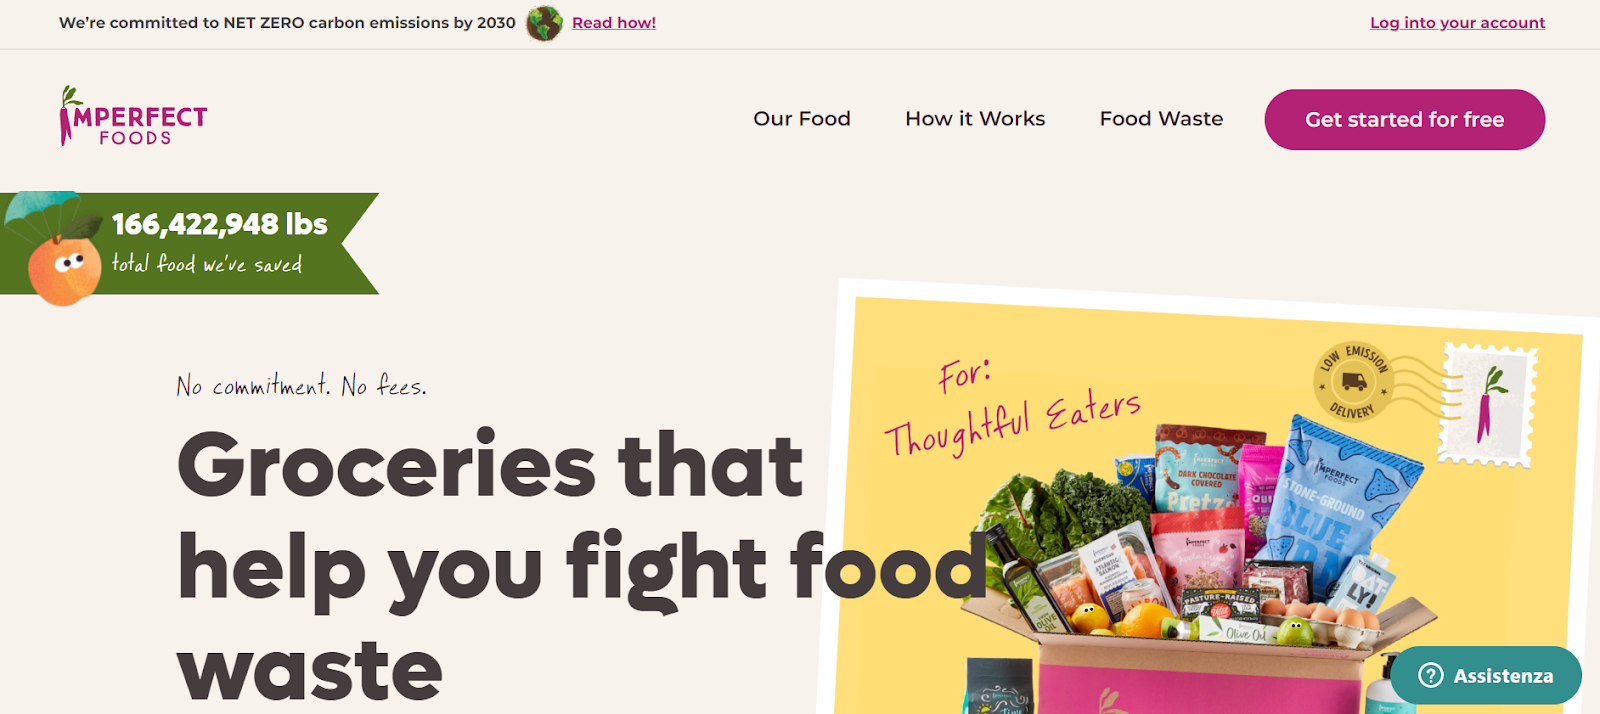 Imperfect Foods website